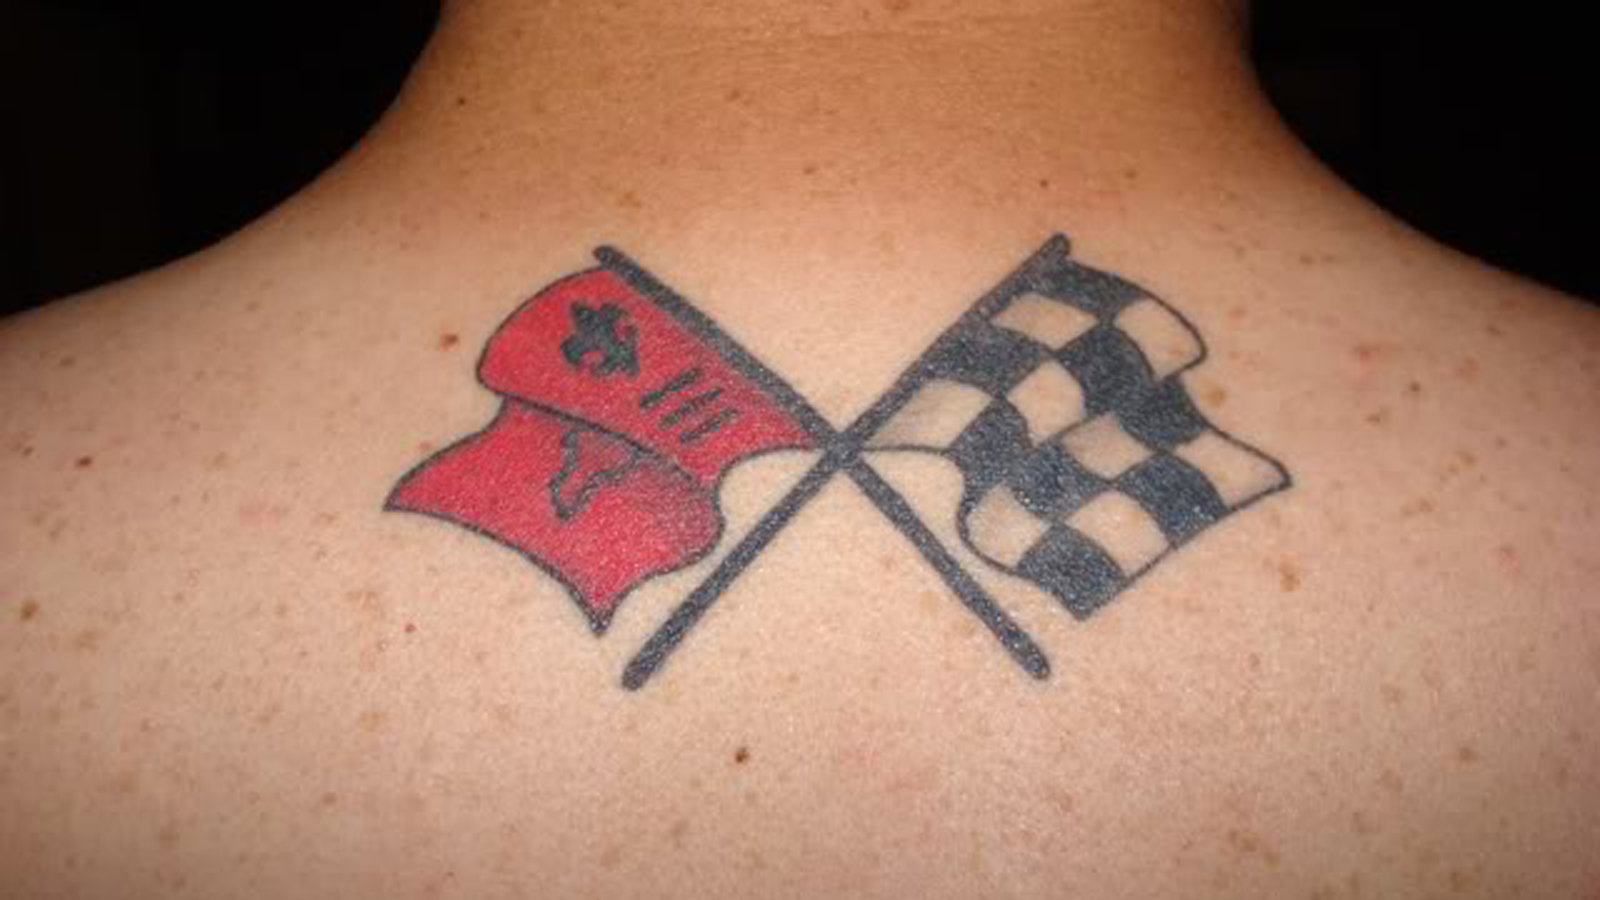 Kaotic Ink Tattoo  Piercing Studio  Corvette emblem Thanks for looking  4016268919  Facebook